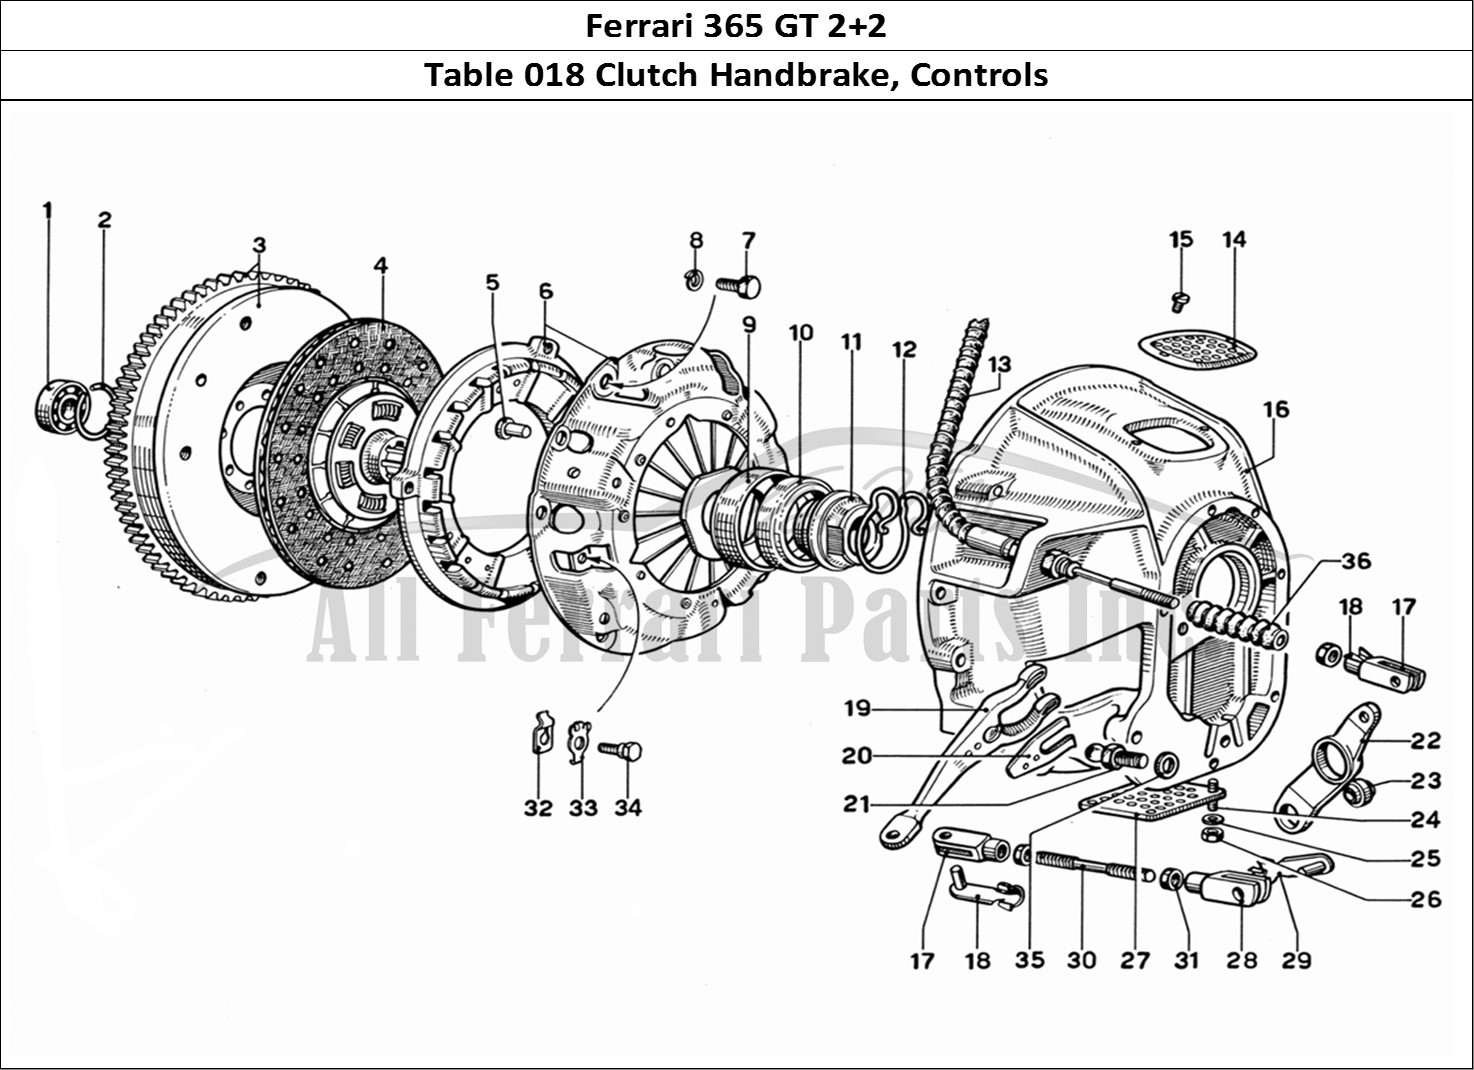 Ferrari Parts Ferrari 365 GT 2+2 (Mechanical) Page 018 Clutch and Controls